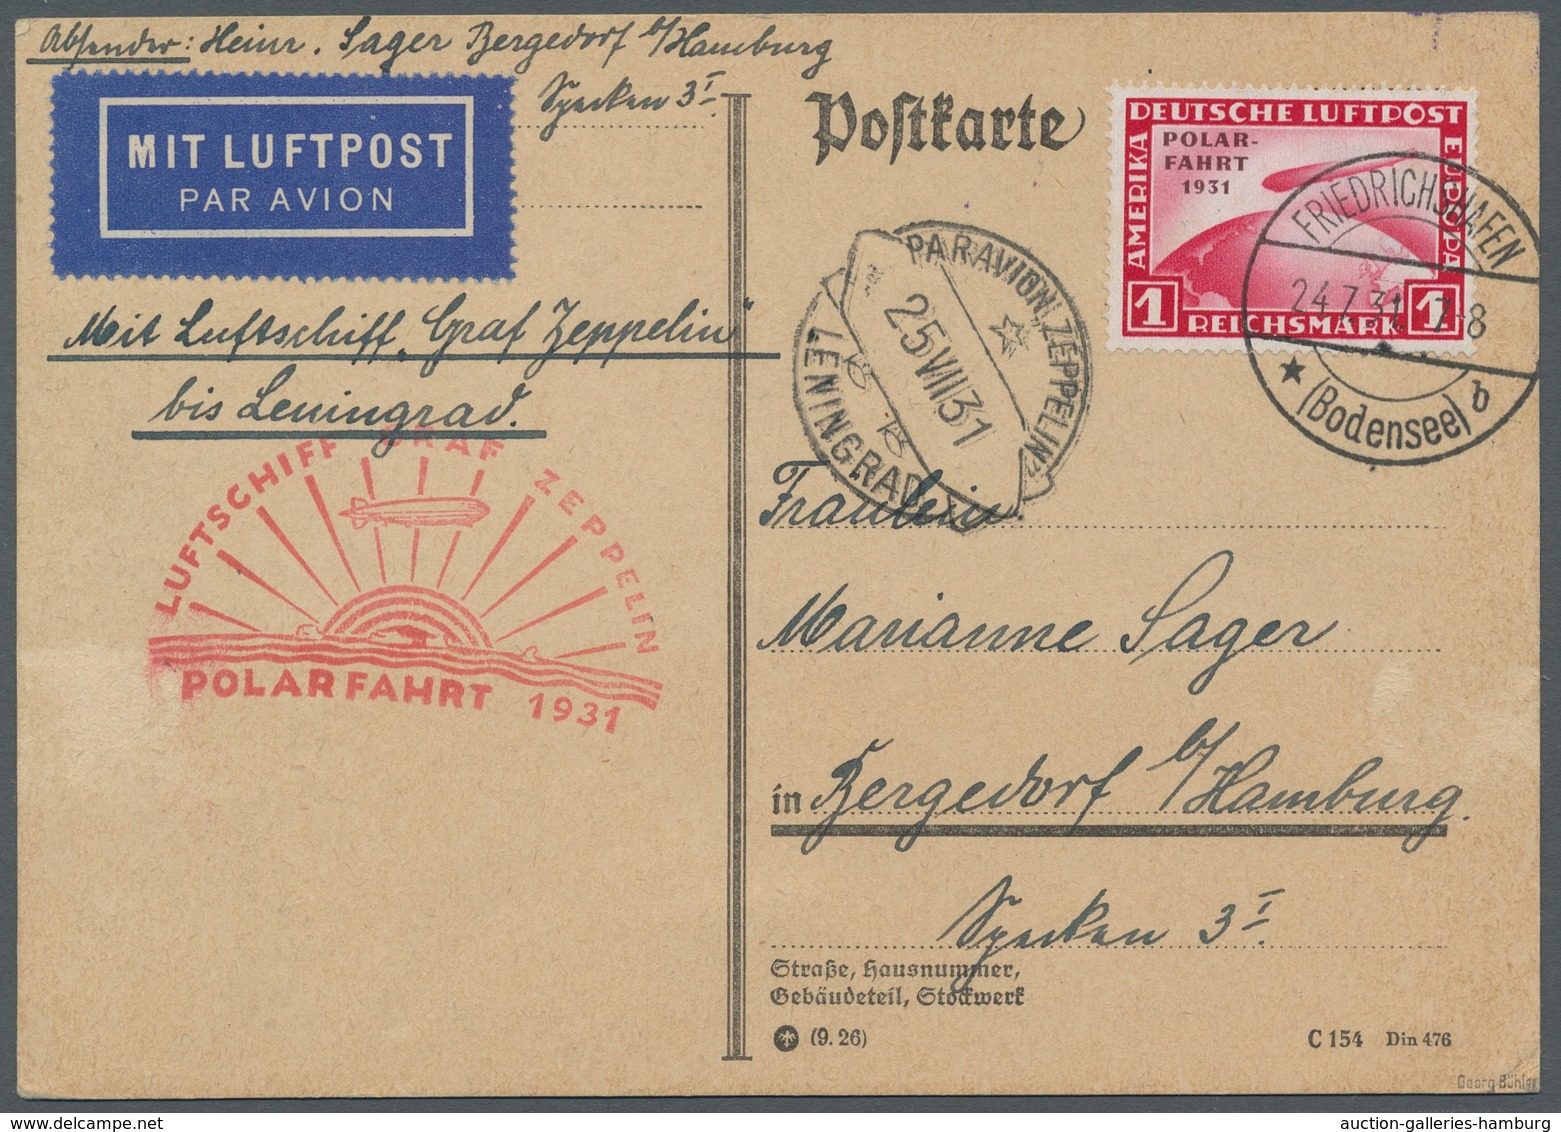 Zeppelinpost Deutschland: 1931 - Polarfahrt, Portorichtig Mit 1 RM Polarfahrt Frankierte Karte Mit A - Correo Aéreo & Zeppelin